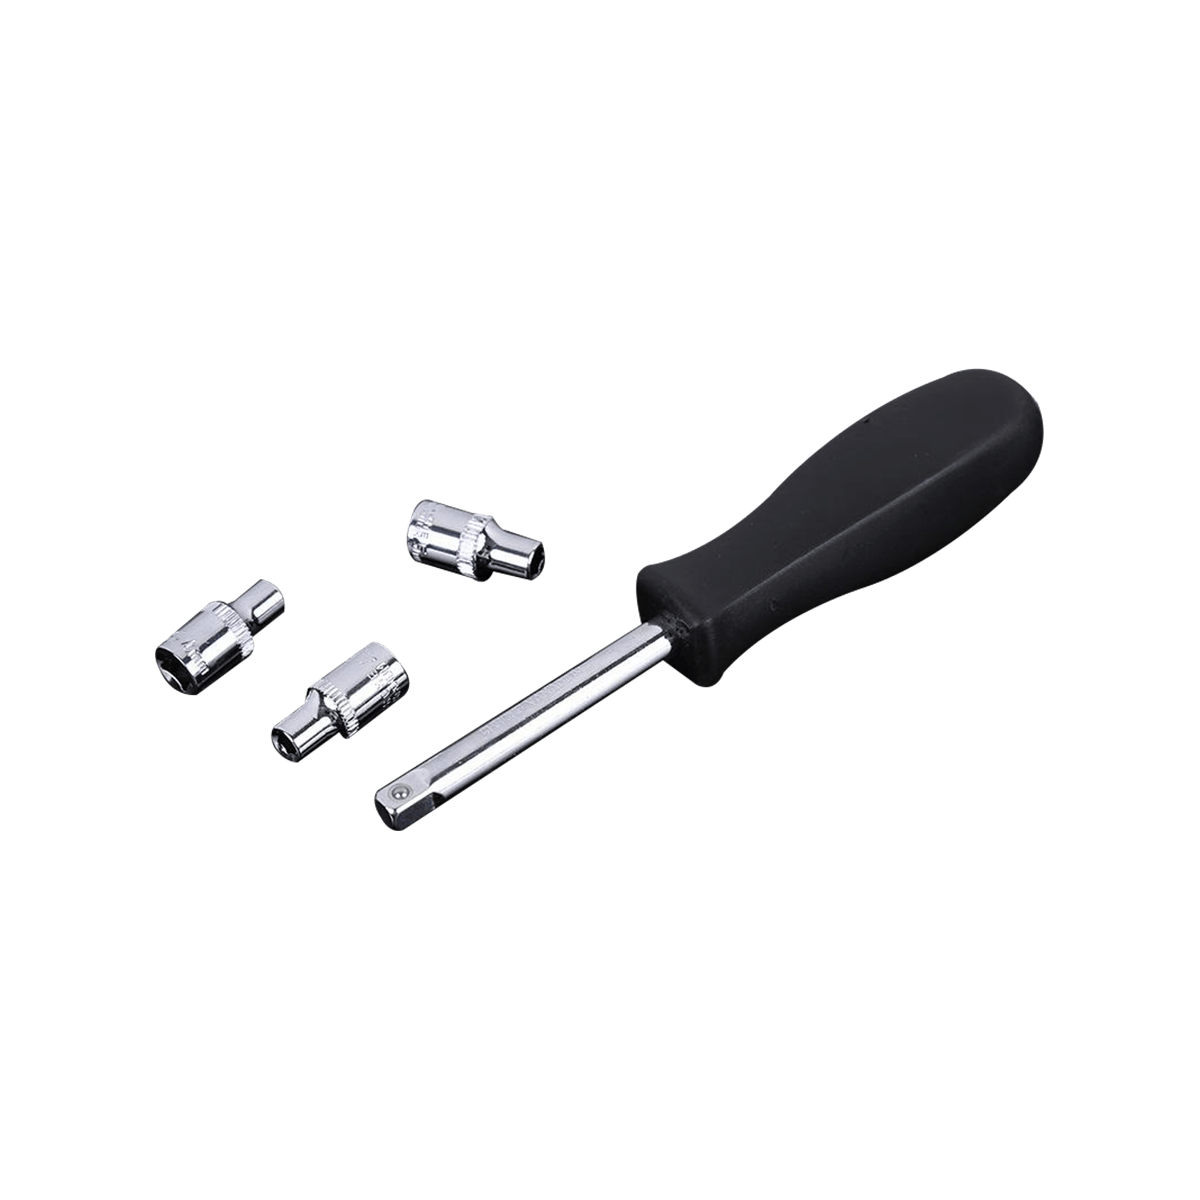 61 Pcs 1/4 'Auto Repair Mechanics Tool Set Ratchet Handle Spanner Universal Joint Socket Kit